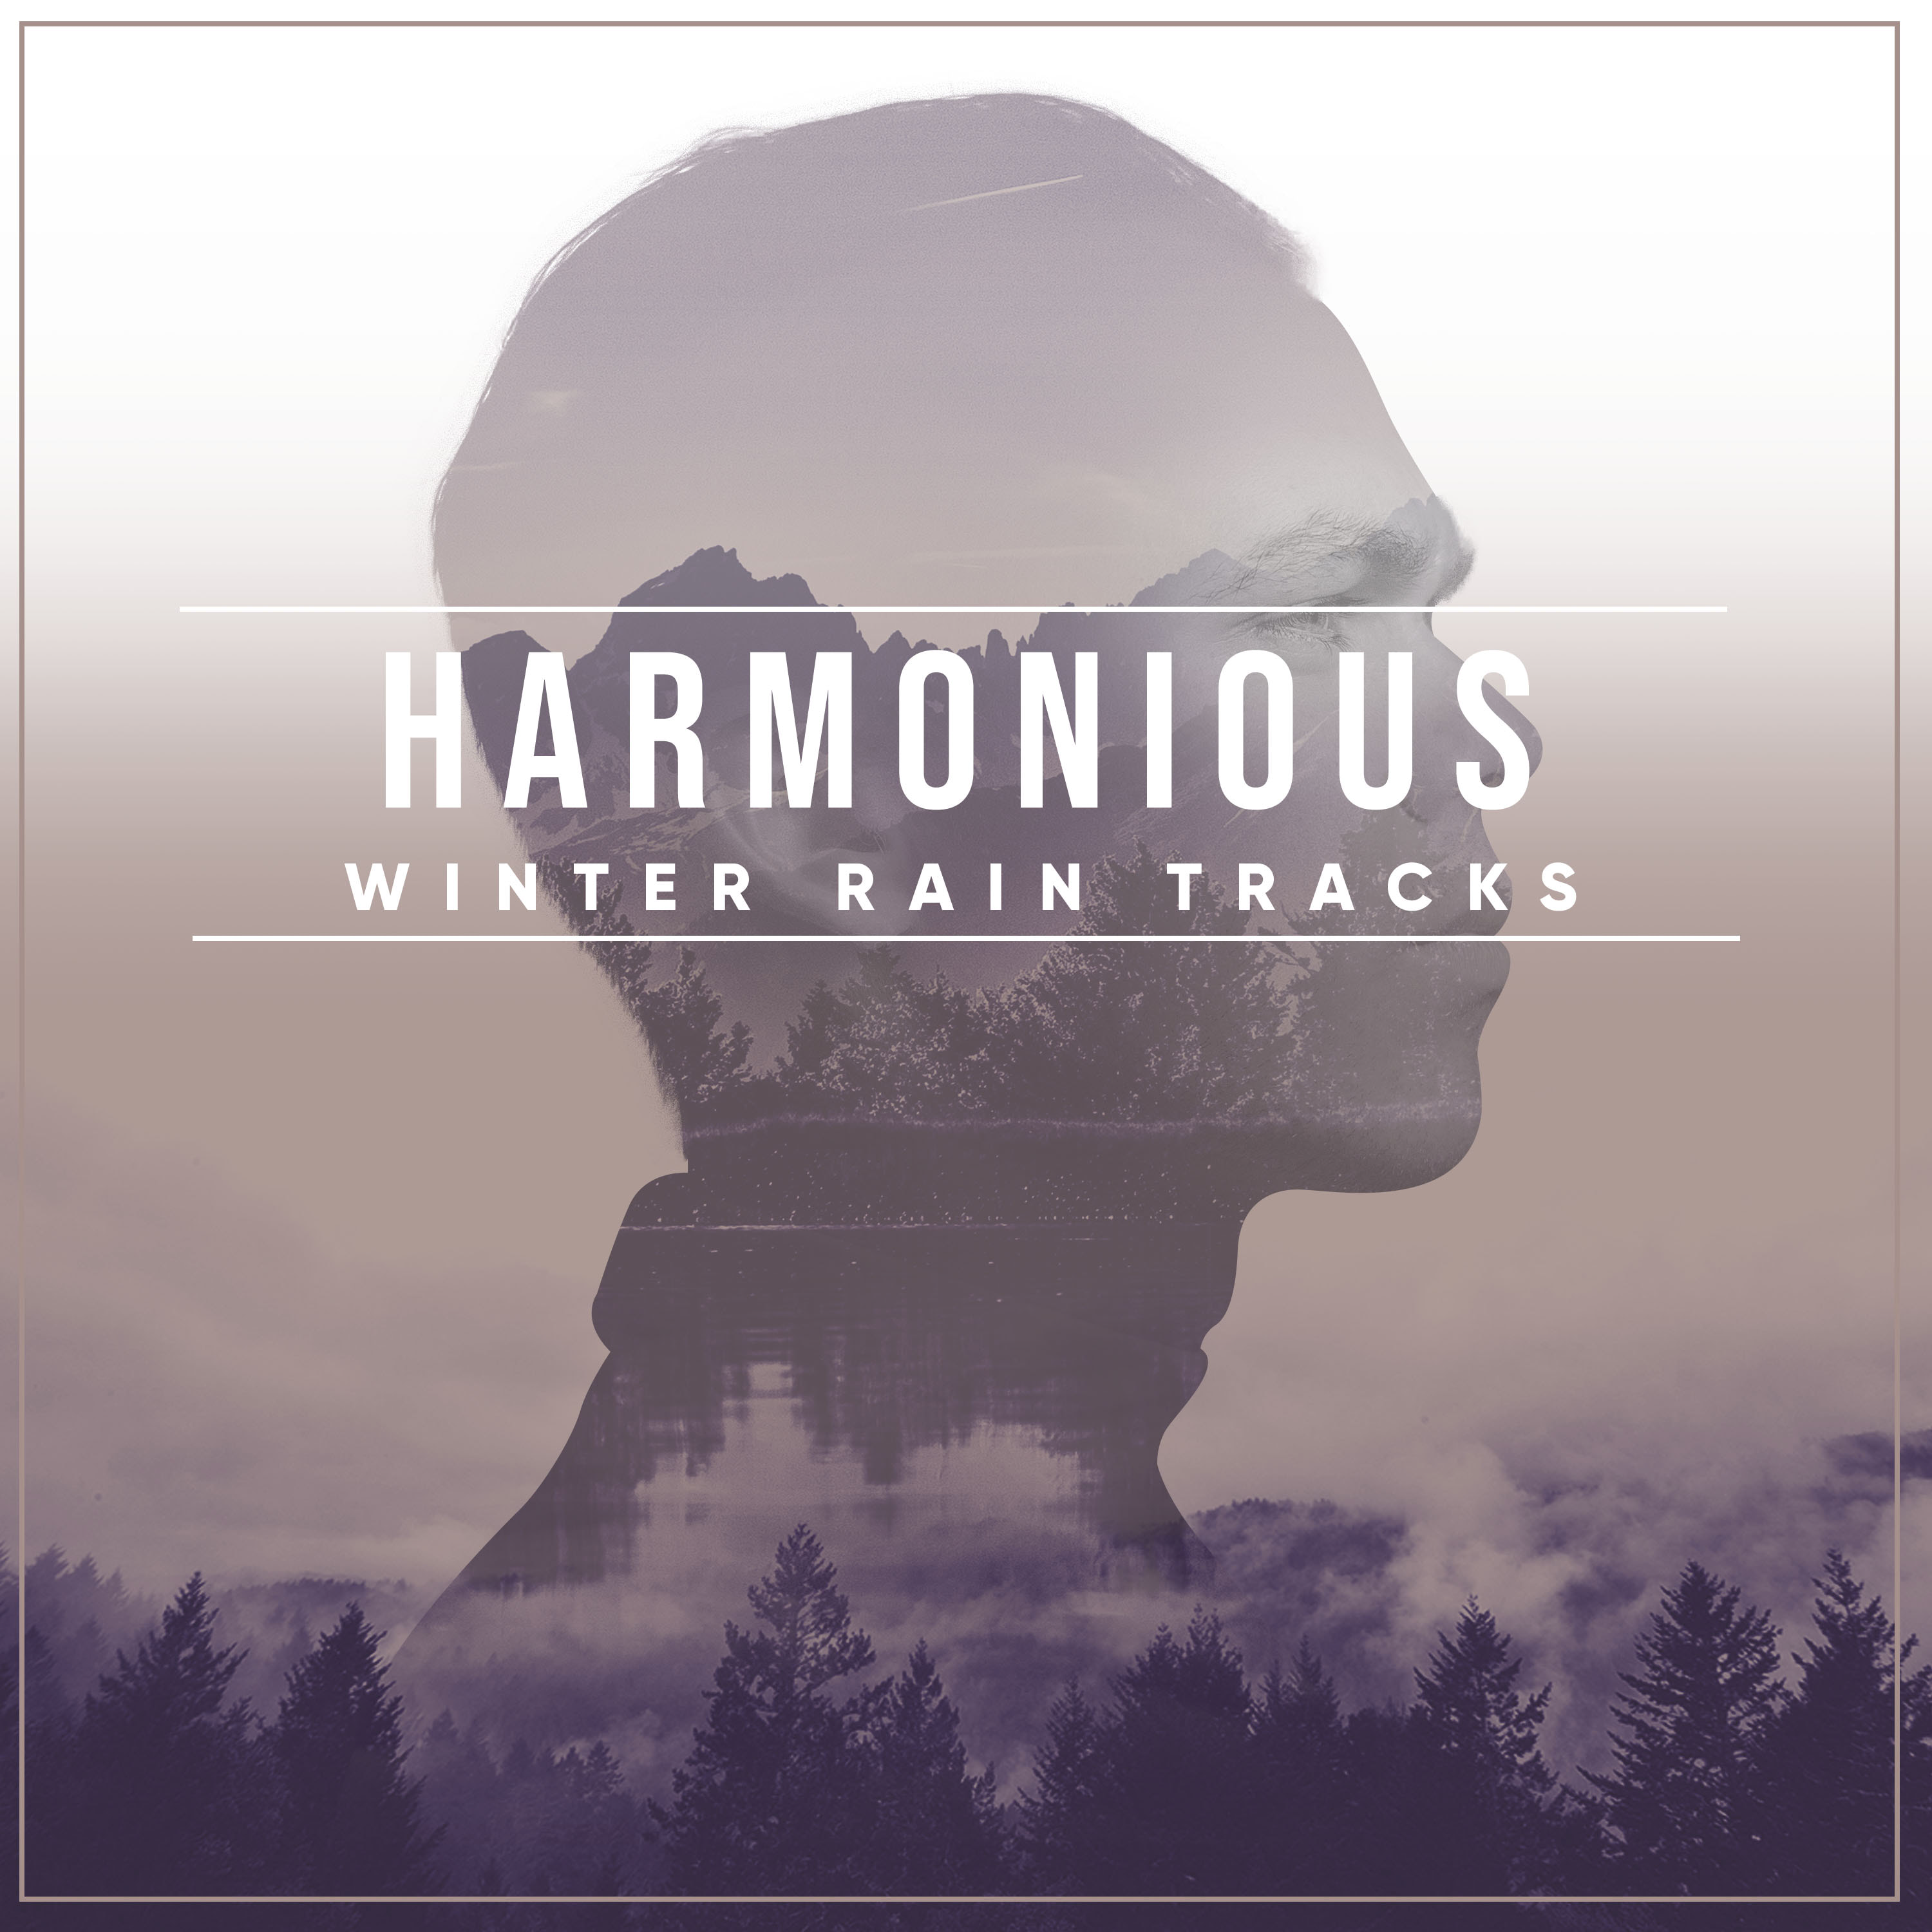 #18 Harmonious Winter Rain Tracks from Mother Nature